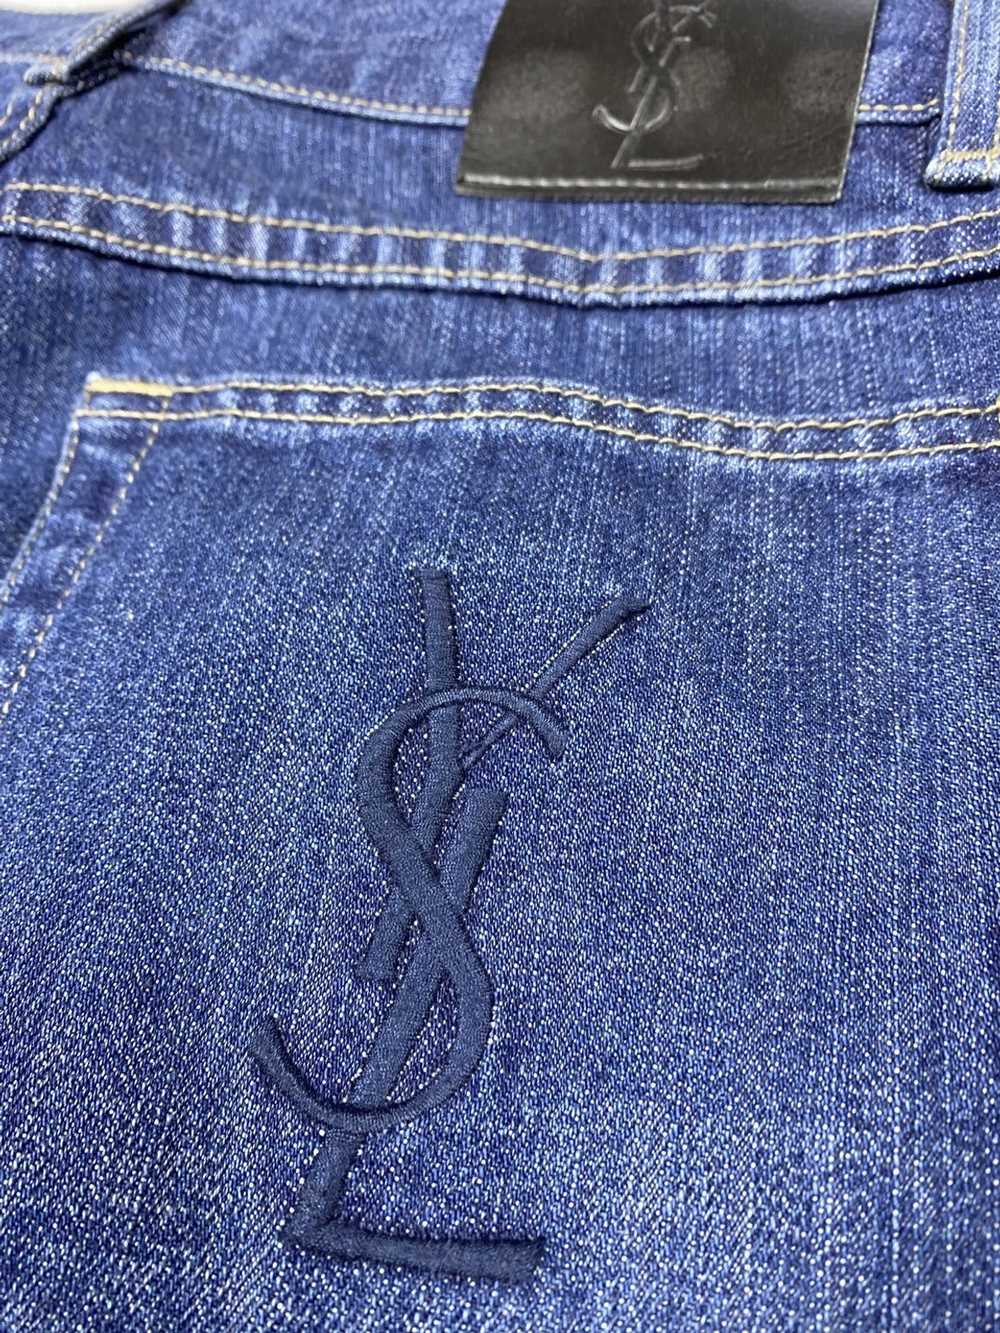 Yves Saint Laurent Yves Saint Laurent YSL jeans - image 8